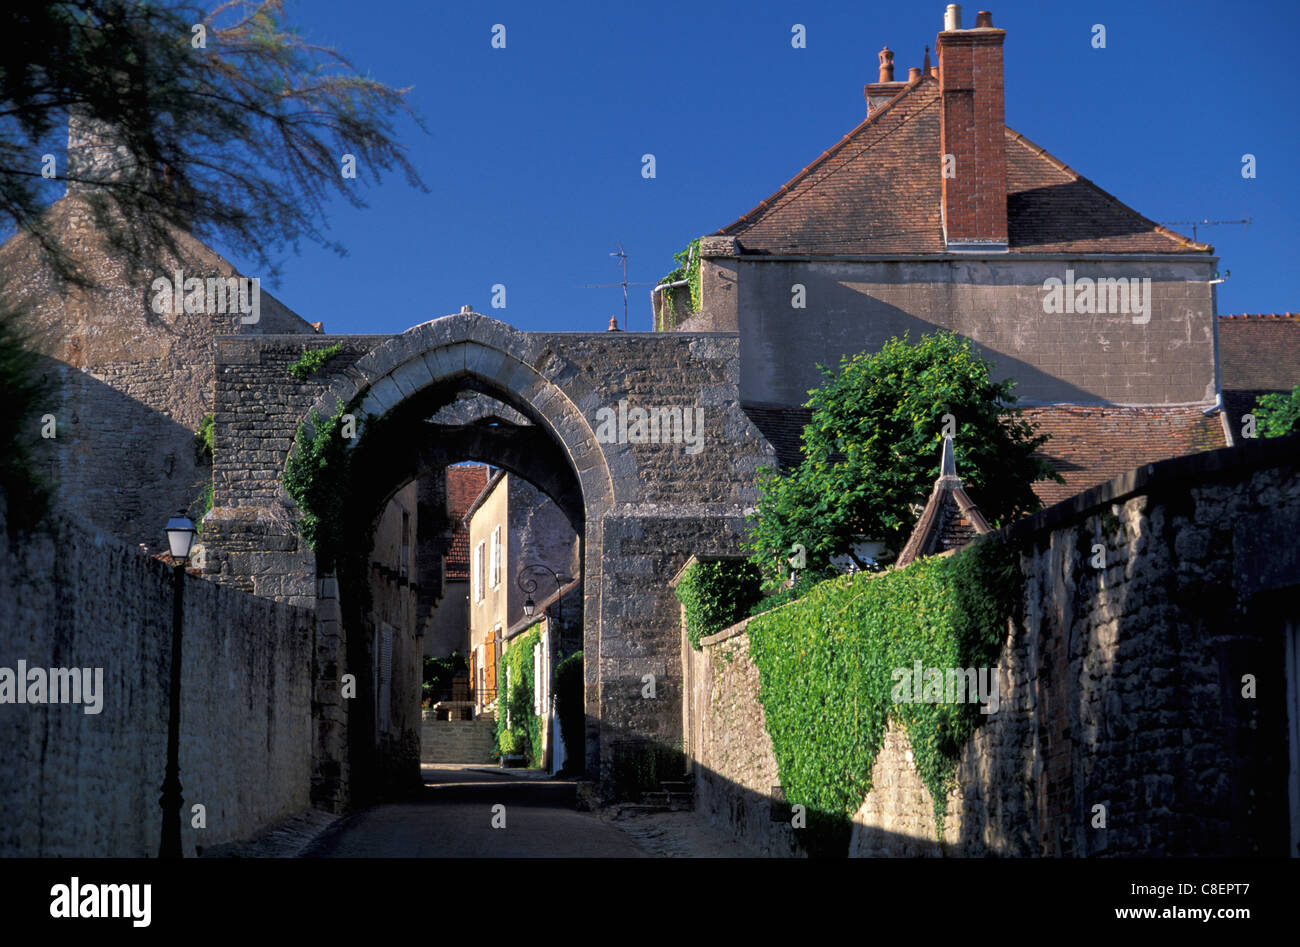 Pared, Ciudad, Gate, Montreal, Borgoña, Francia, Europa, medieval Foto de stock